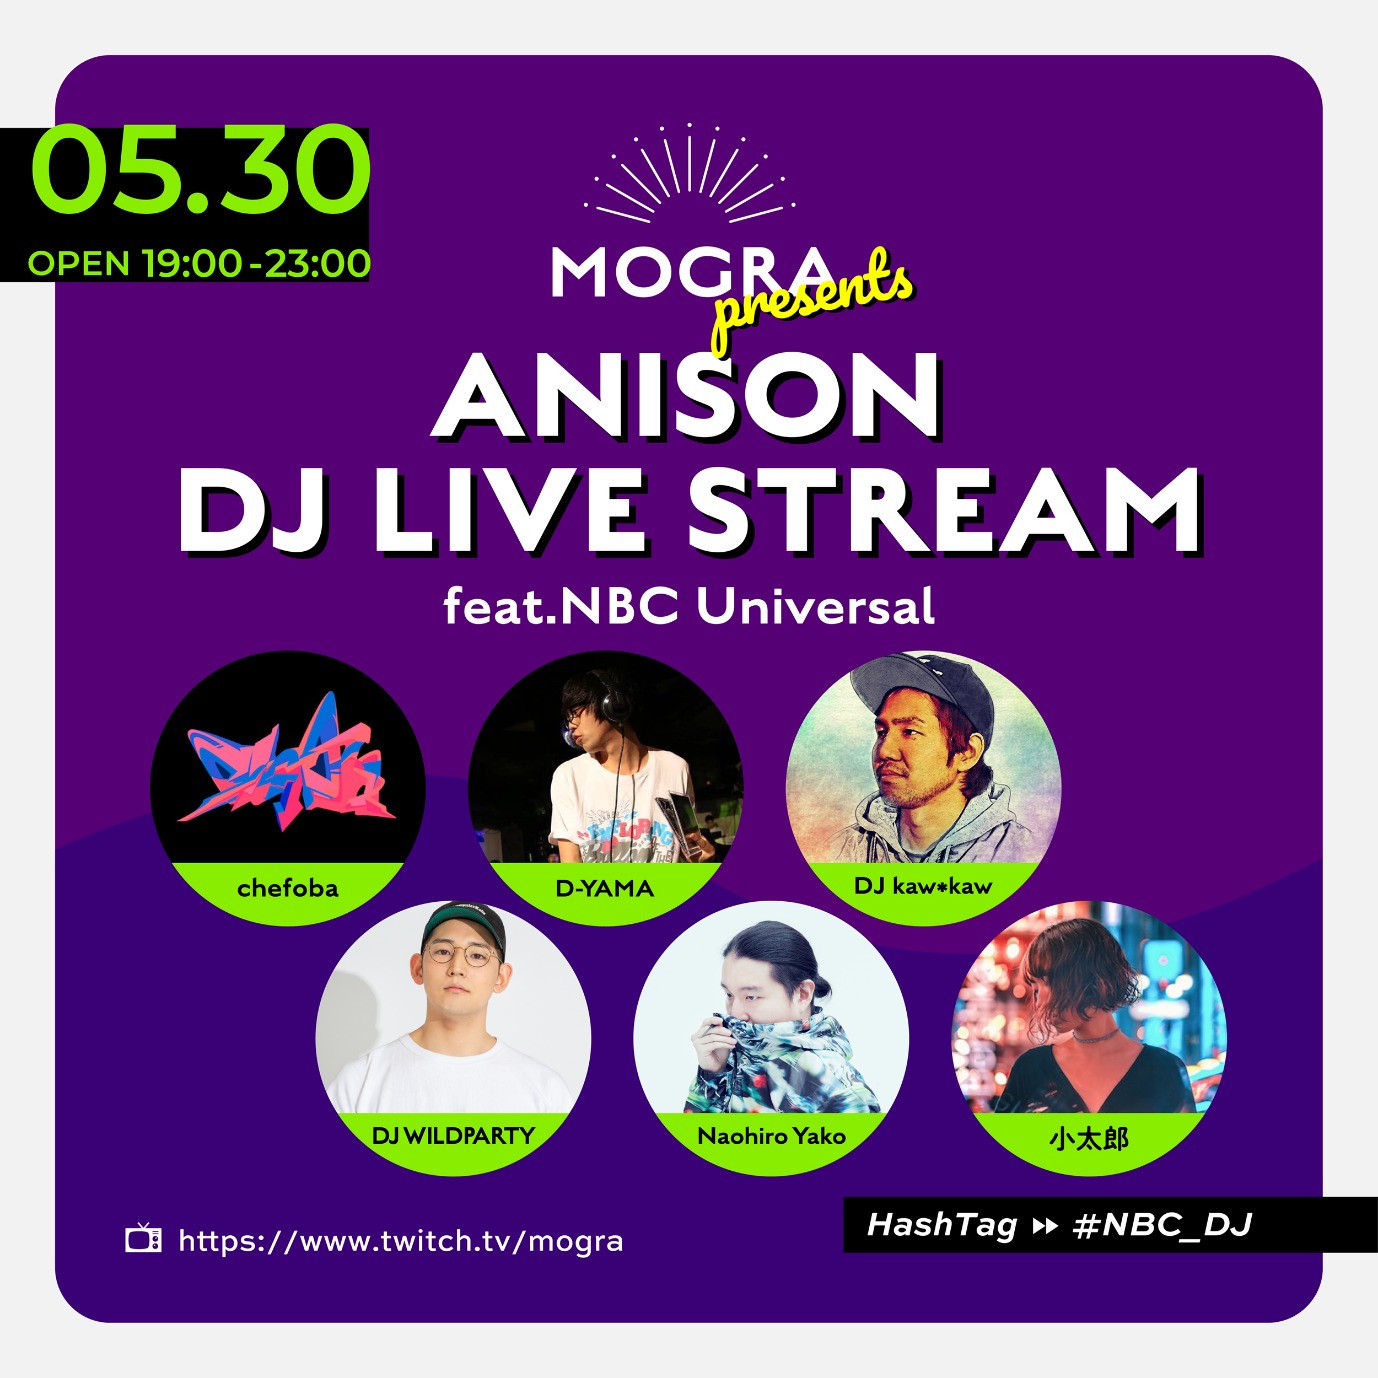 MOGRA presents ANISON DJ LIVE STREAM feat. NBC Universal